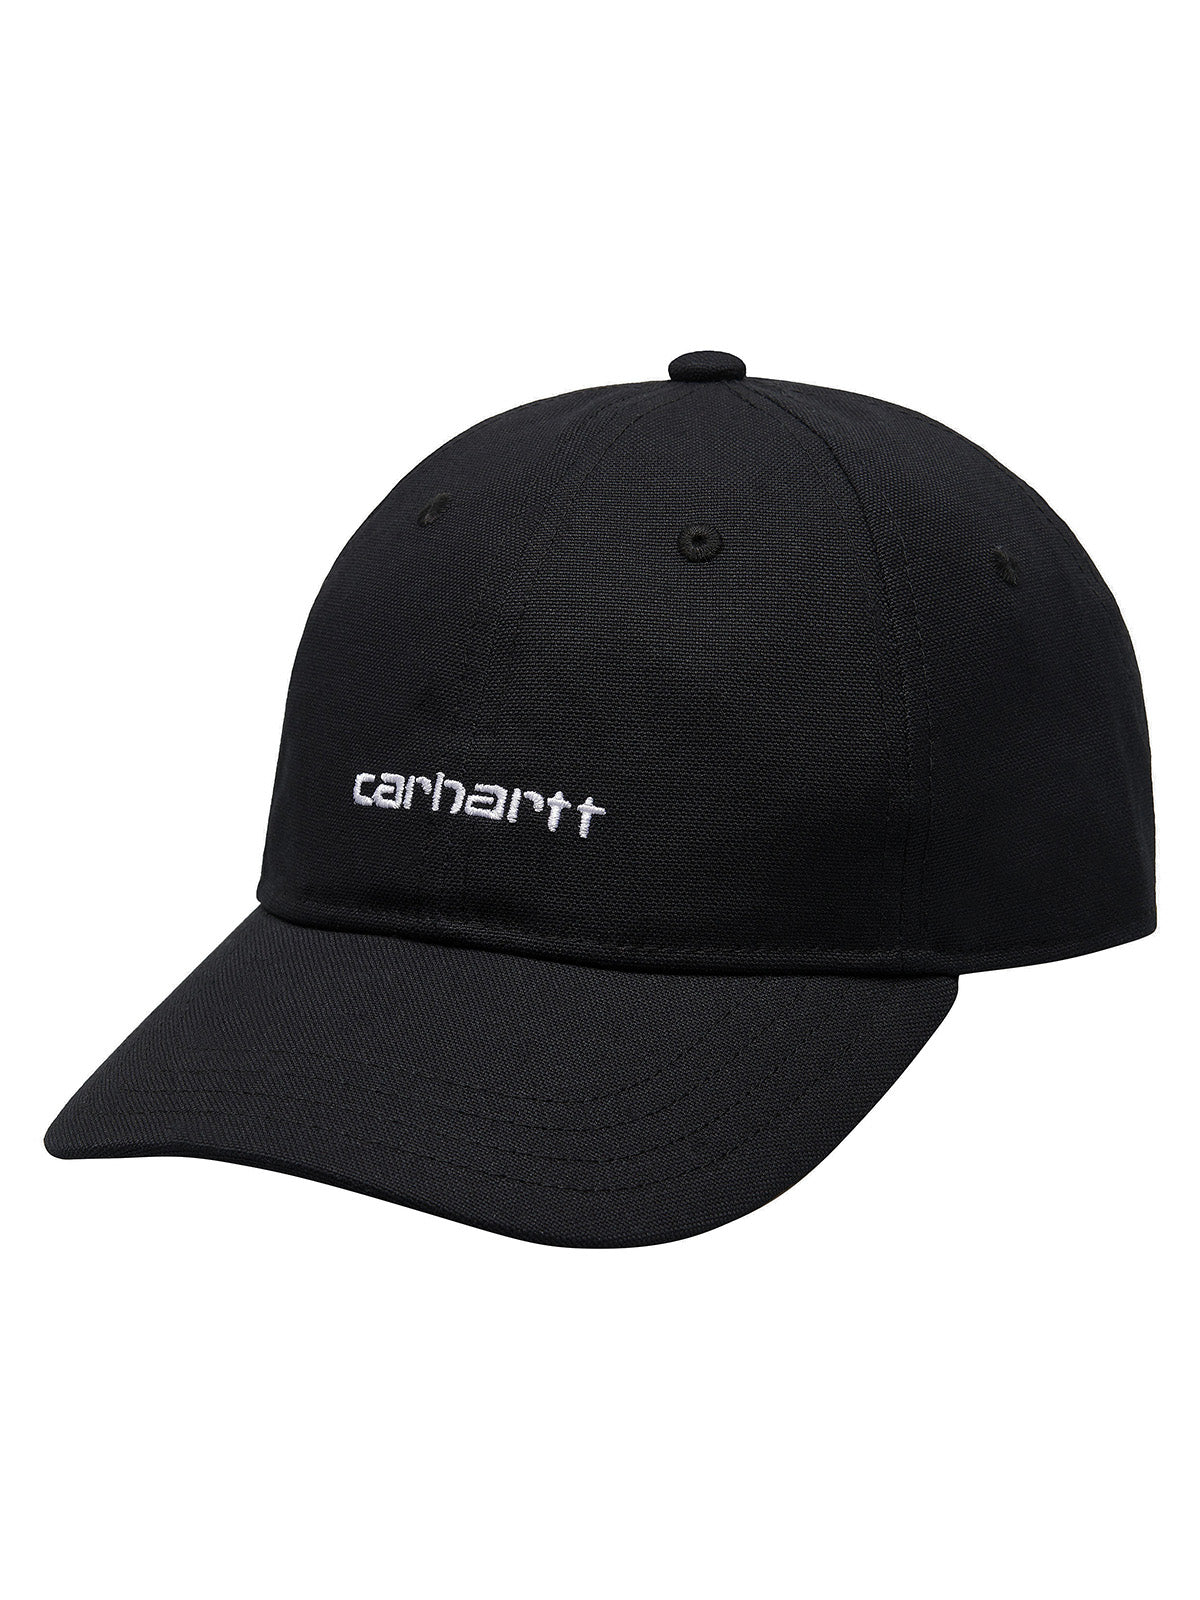 Unisex Carhartt Wip Baseball Caps - Canvas Script Cap - Black